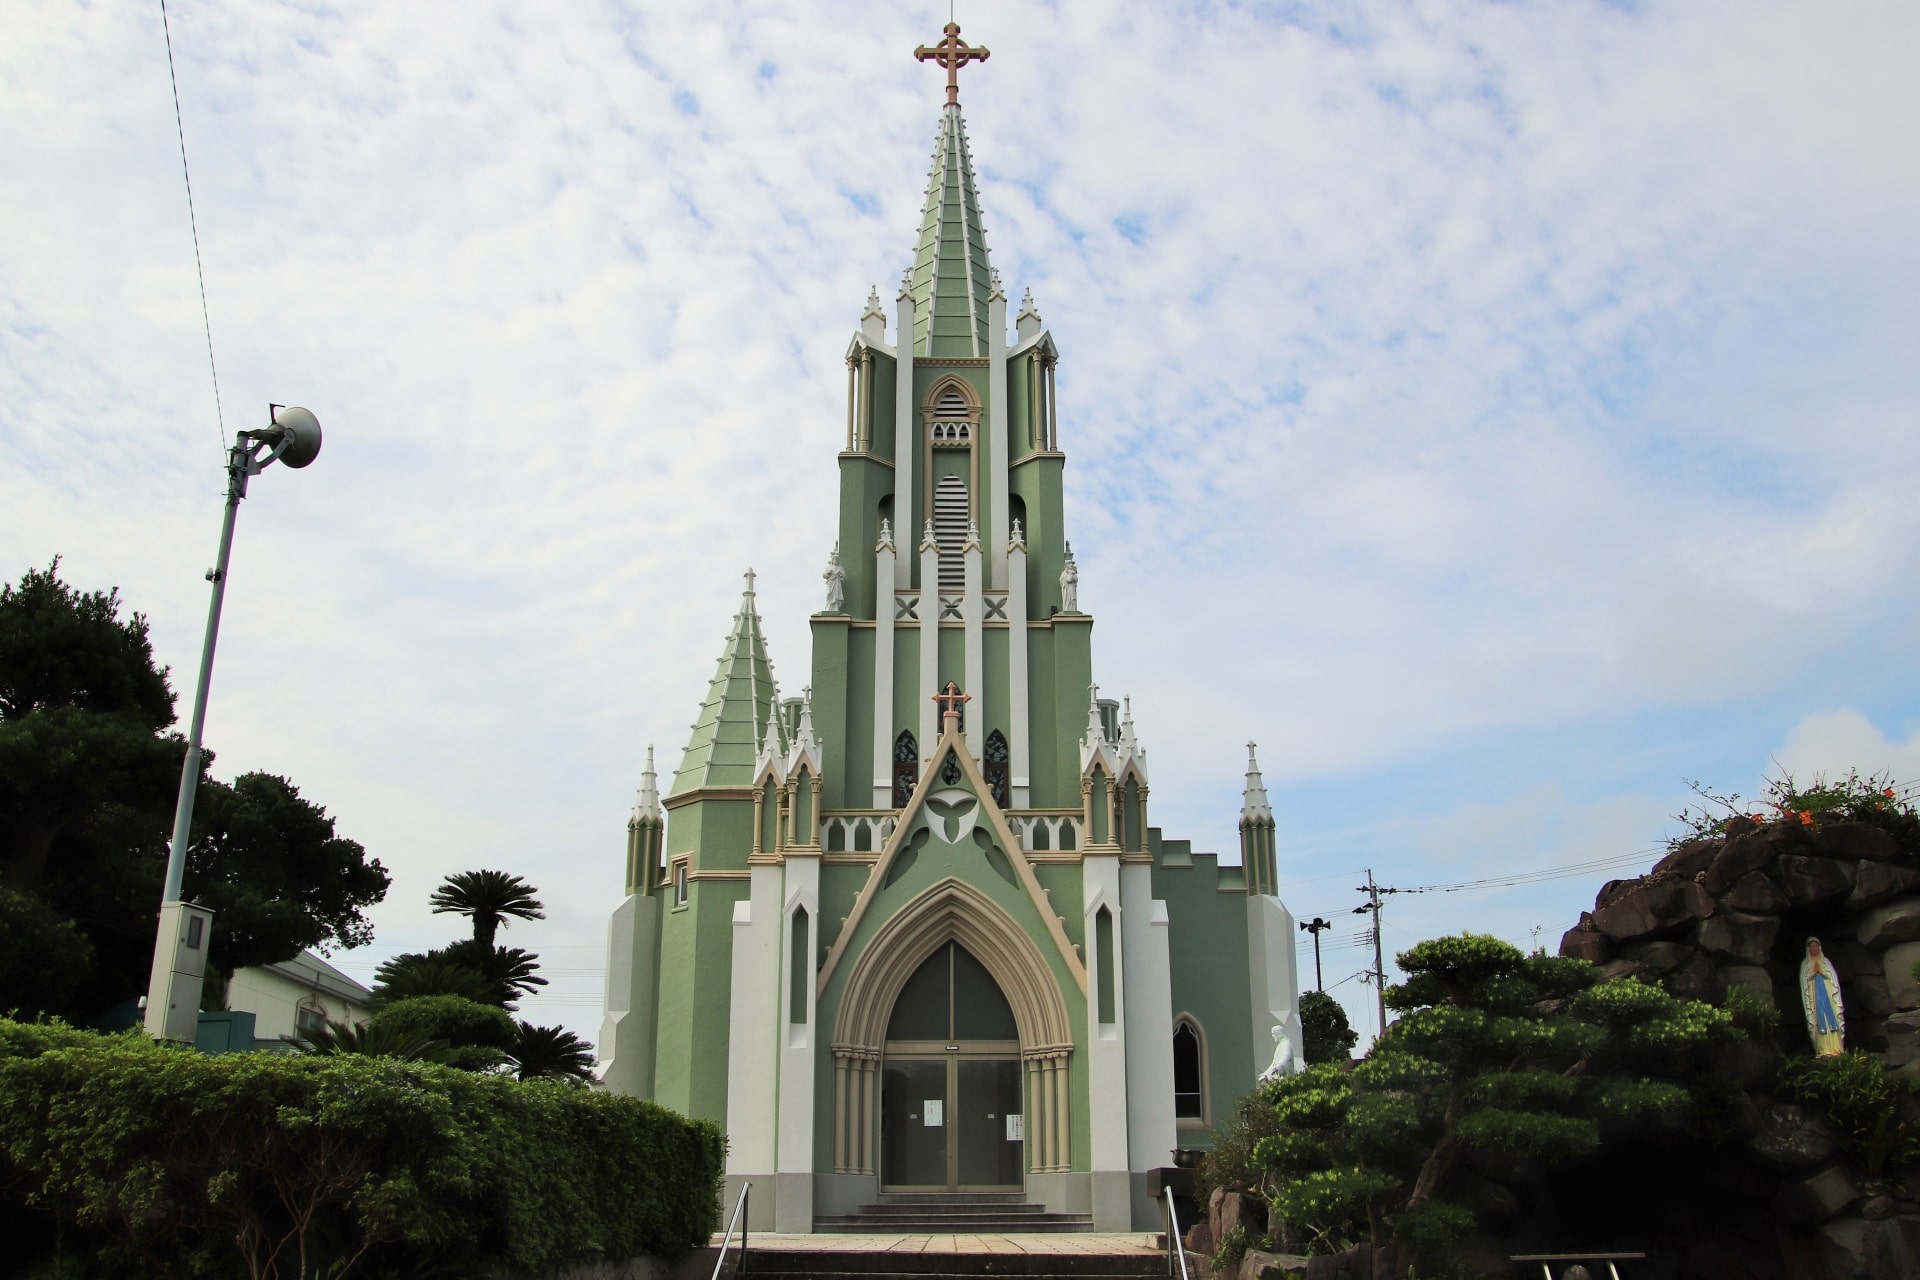 St. Francis Xavier Memorial Church in Nagasaki